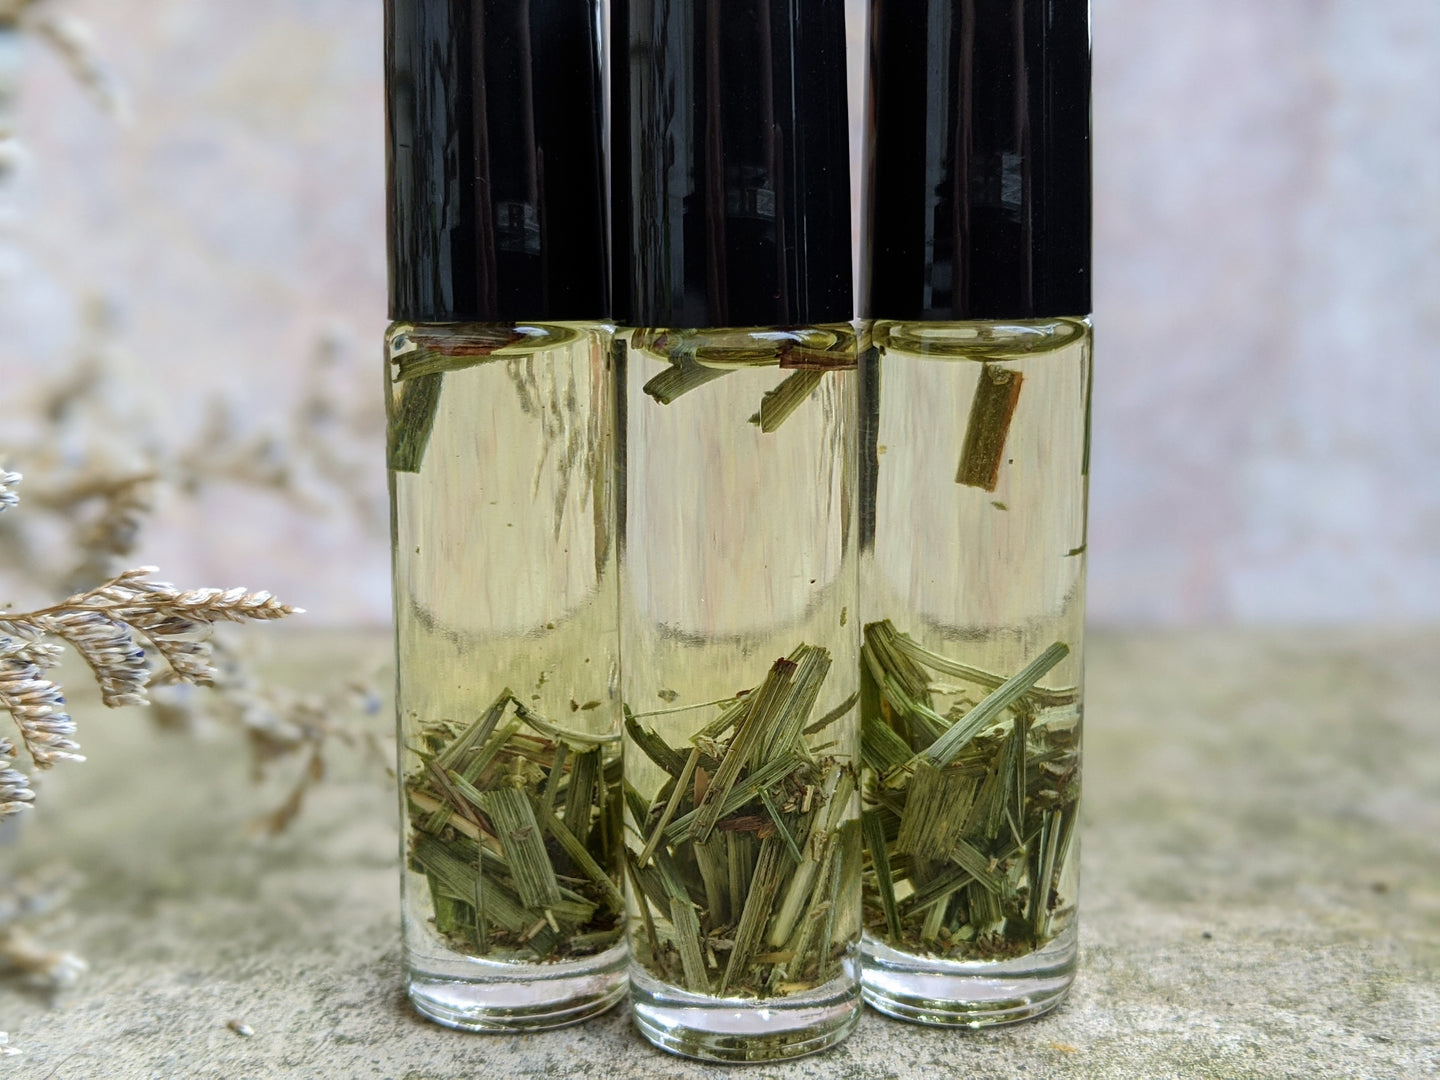 Green Tea with Lemongrass 10ml Perfume Roller